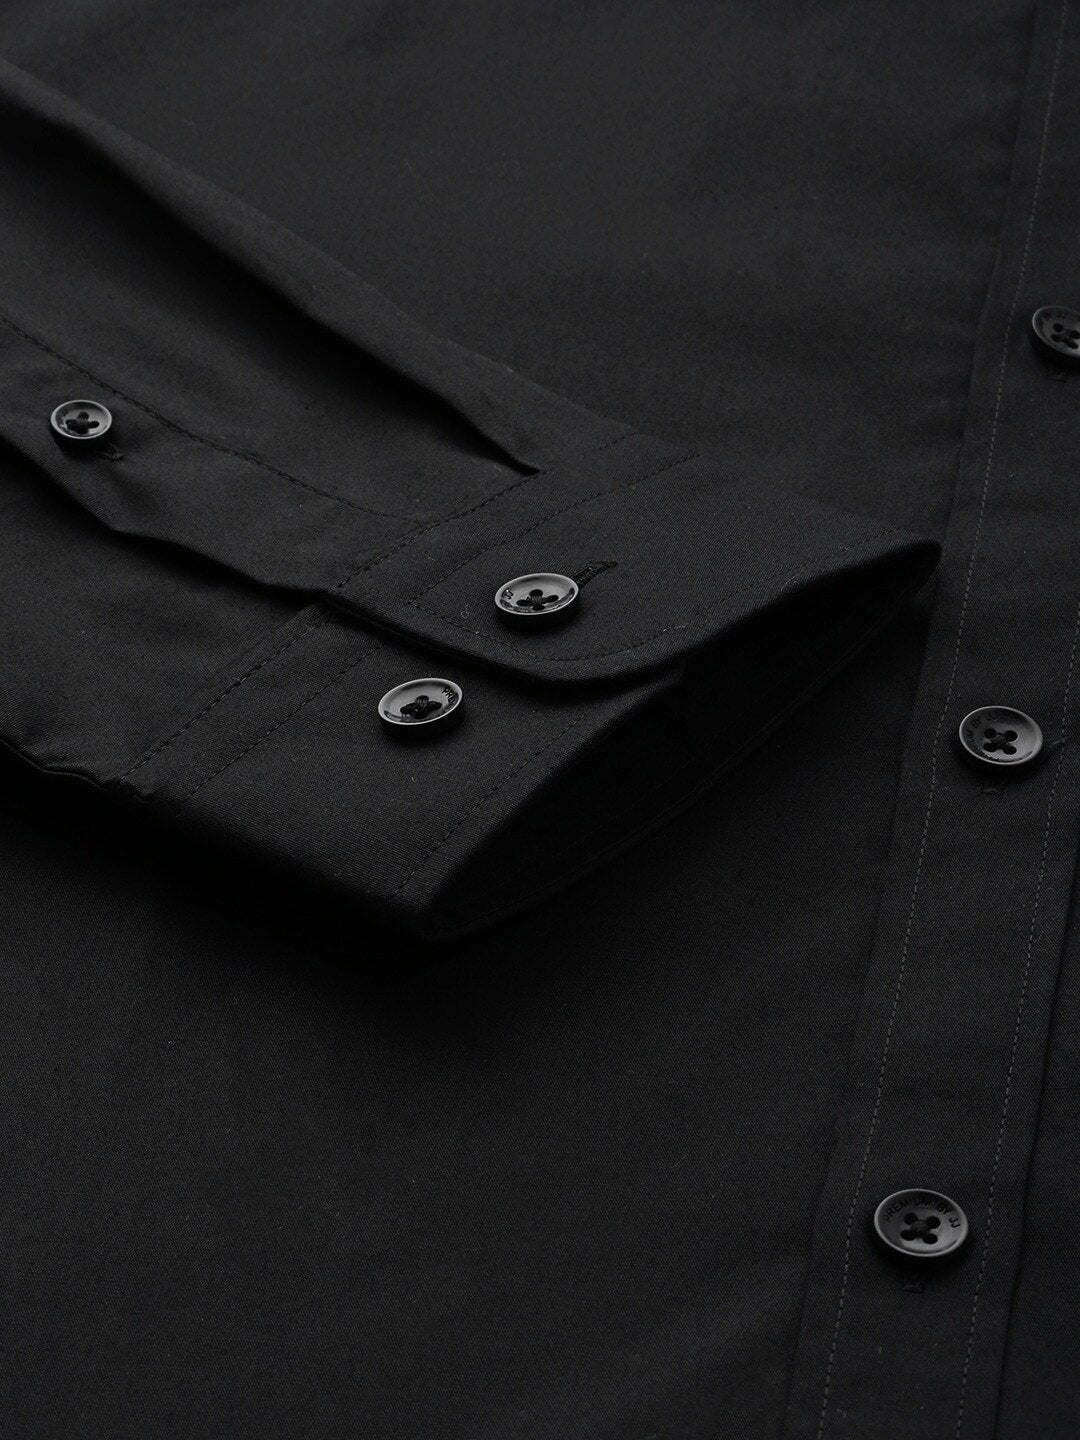 Men Black Slim Fit Solid Smart Casual Shirt-2037220015 - Discount Store